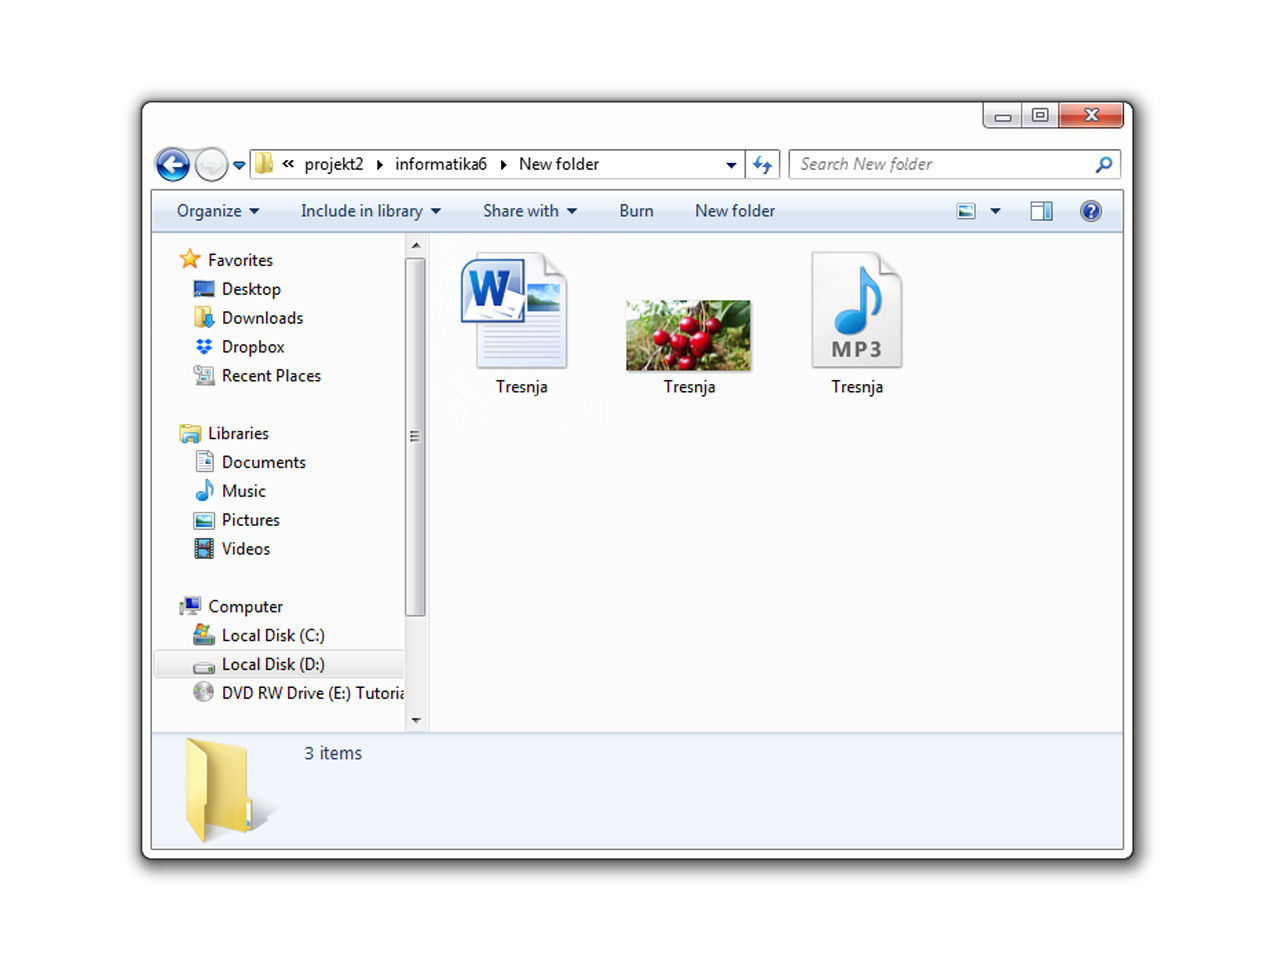 Zaslon Explorera s tri datoteke istog imena 